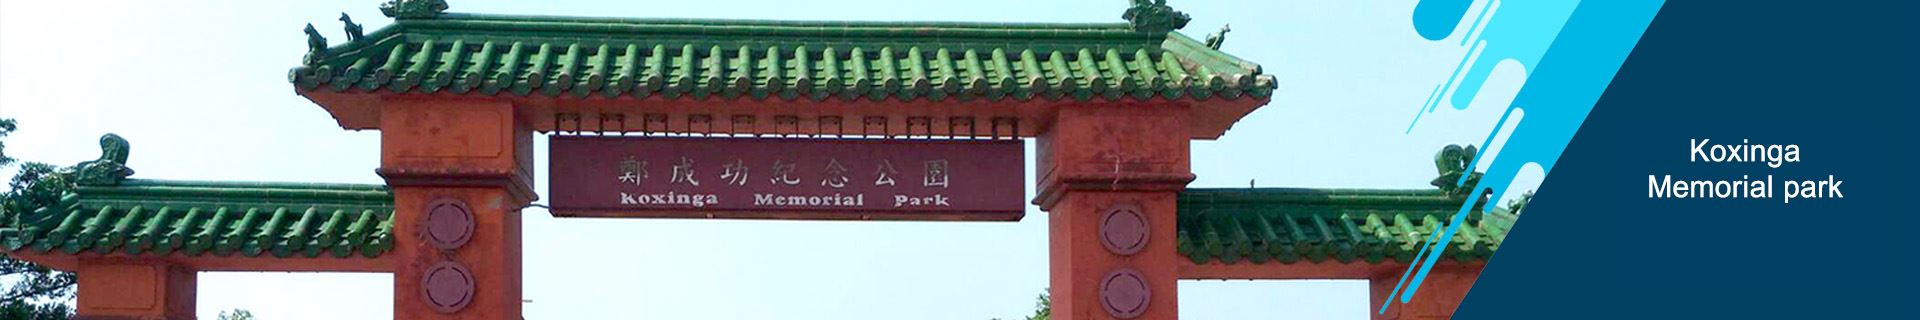 Koxinga Memorial park